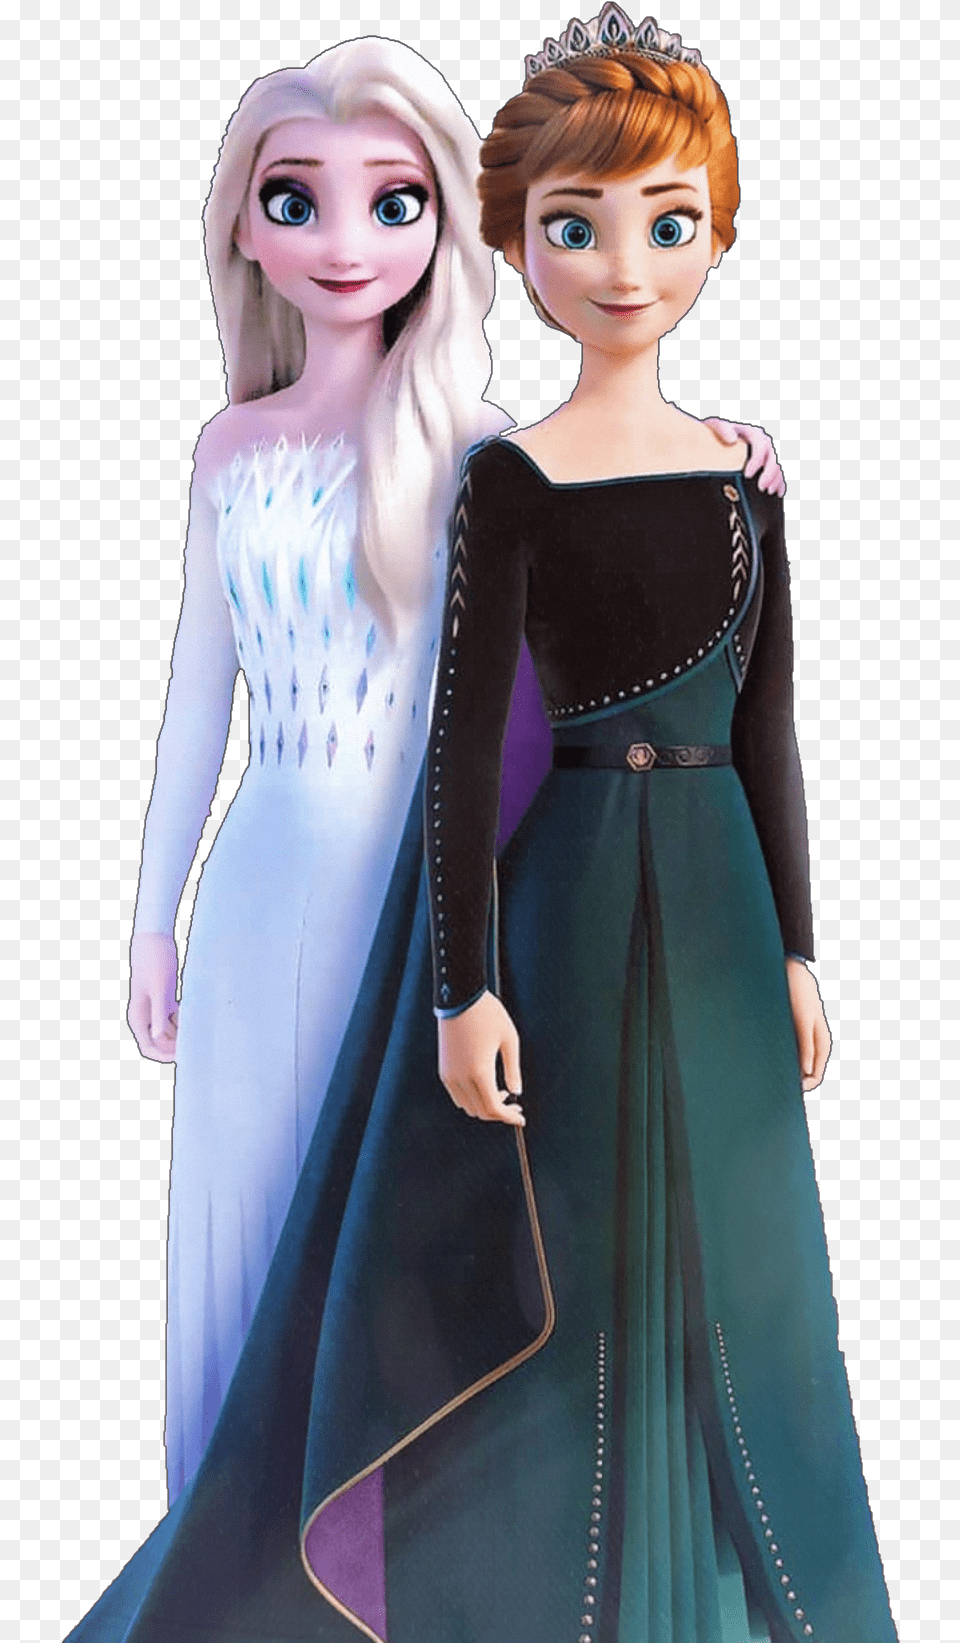 Elsa Anna Elsaandanna Frozen Frozen2 Anna Frozen Elsa, Adult, Toy, Person, Woman Free Png Download